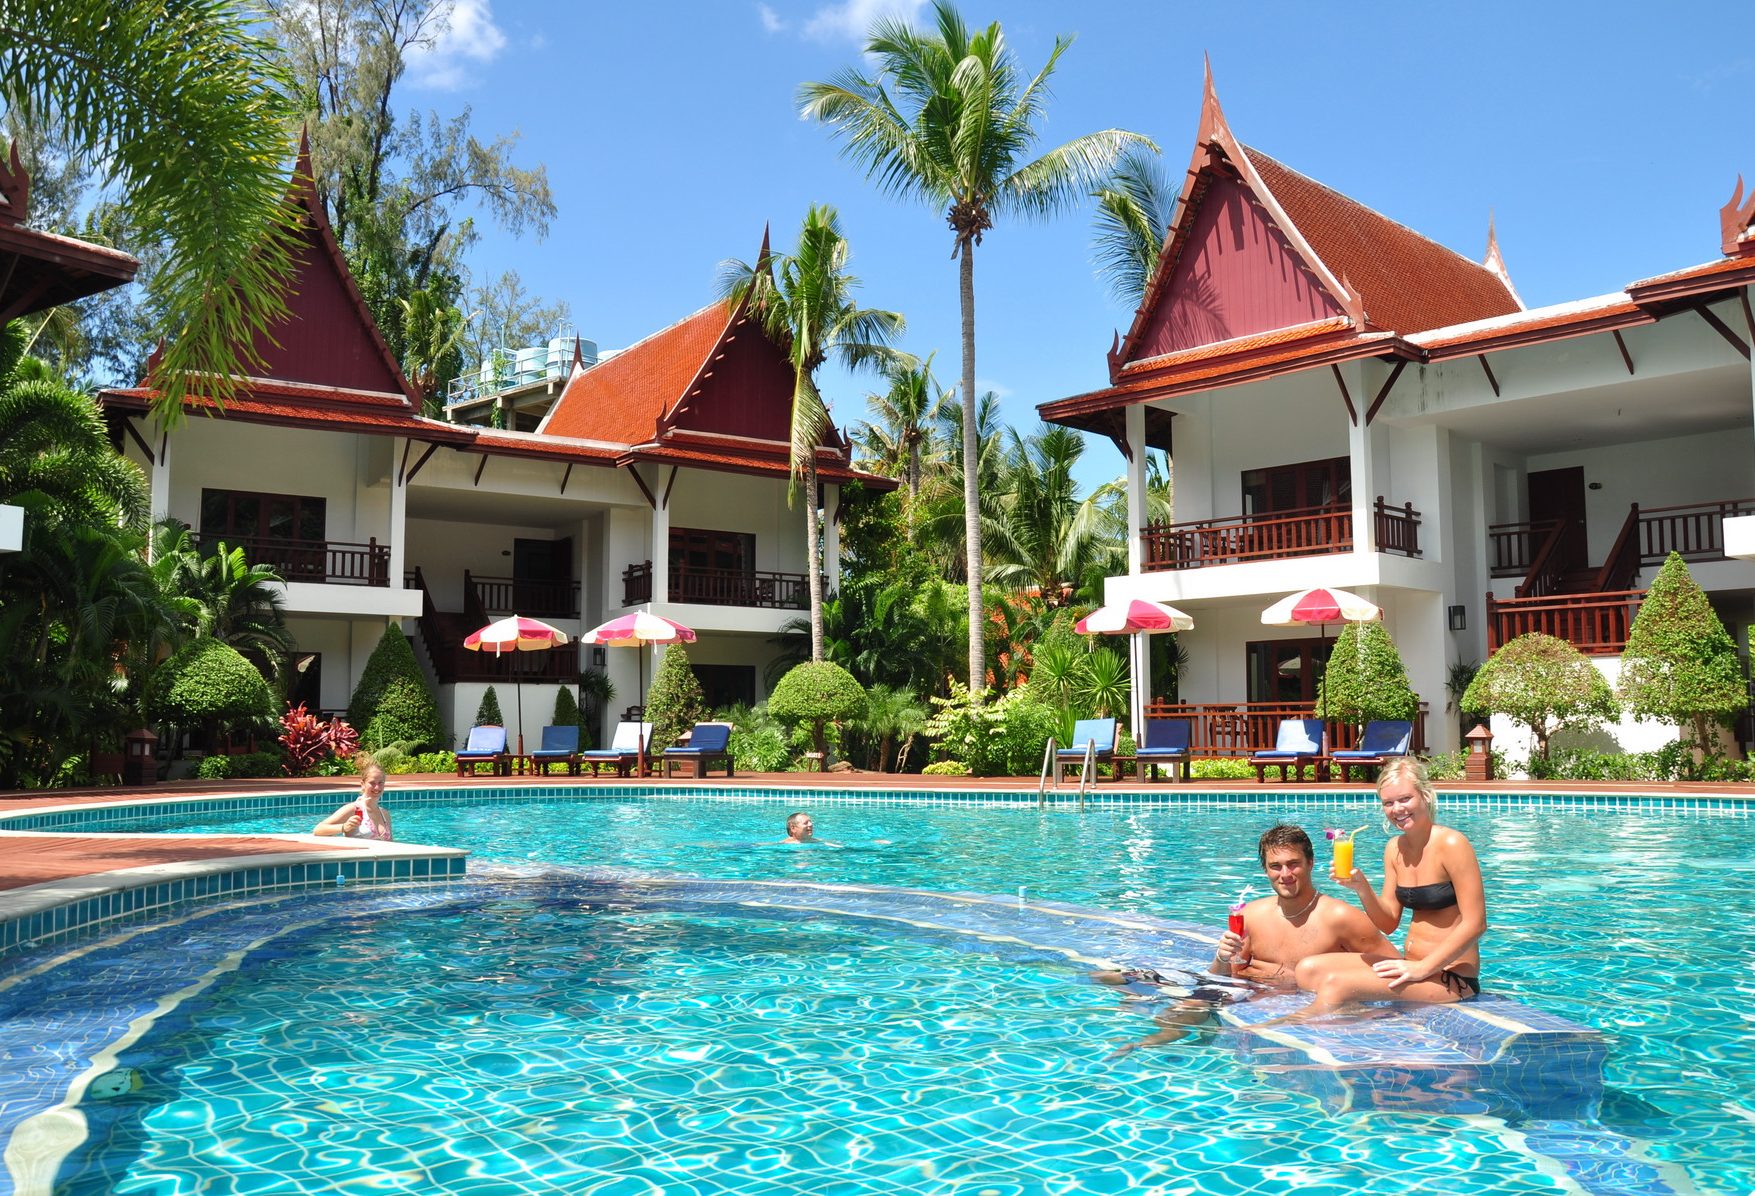  Hotels  op Koh  Lanta  Thailand 333travel